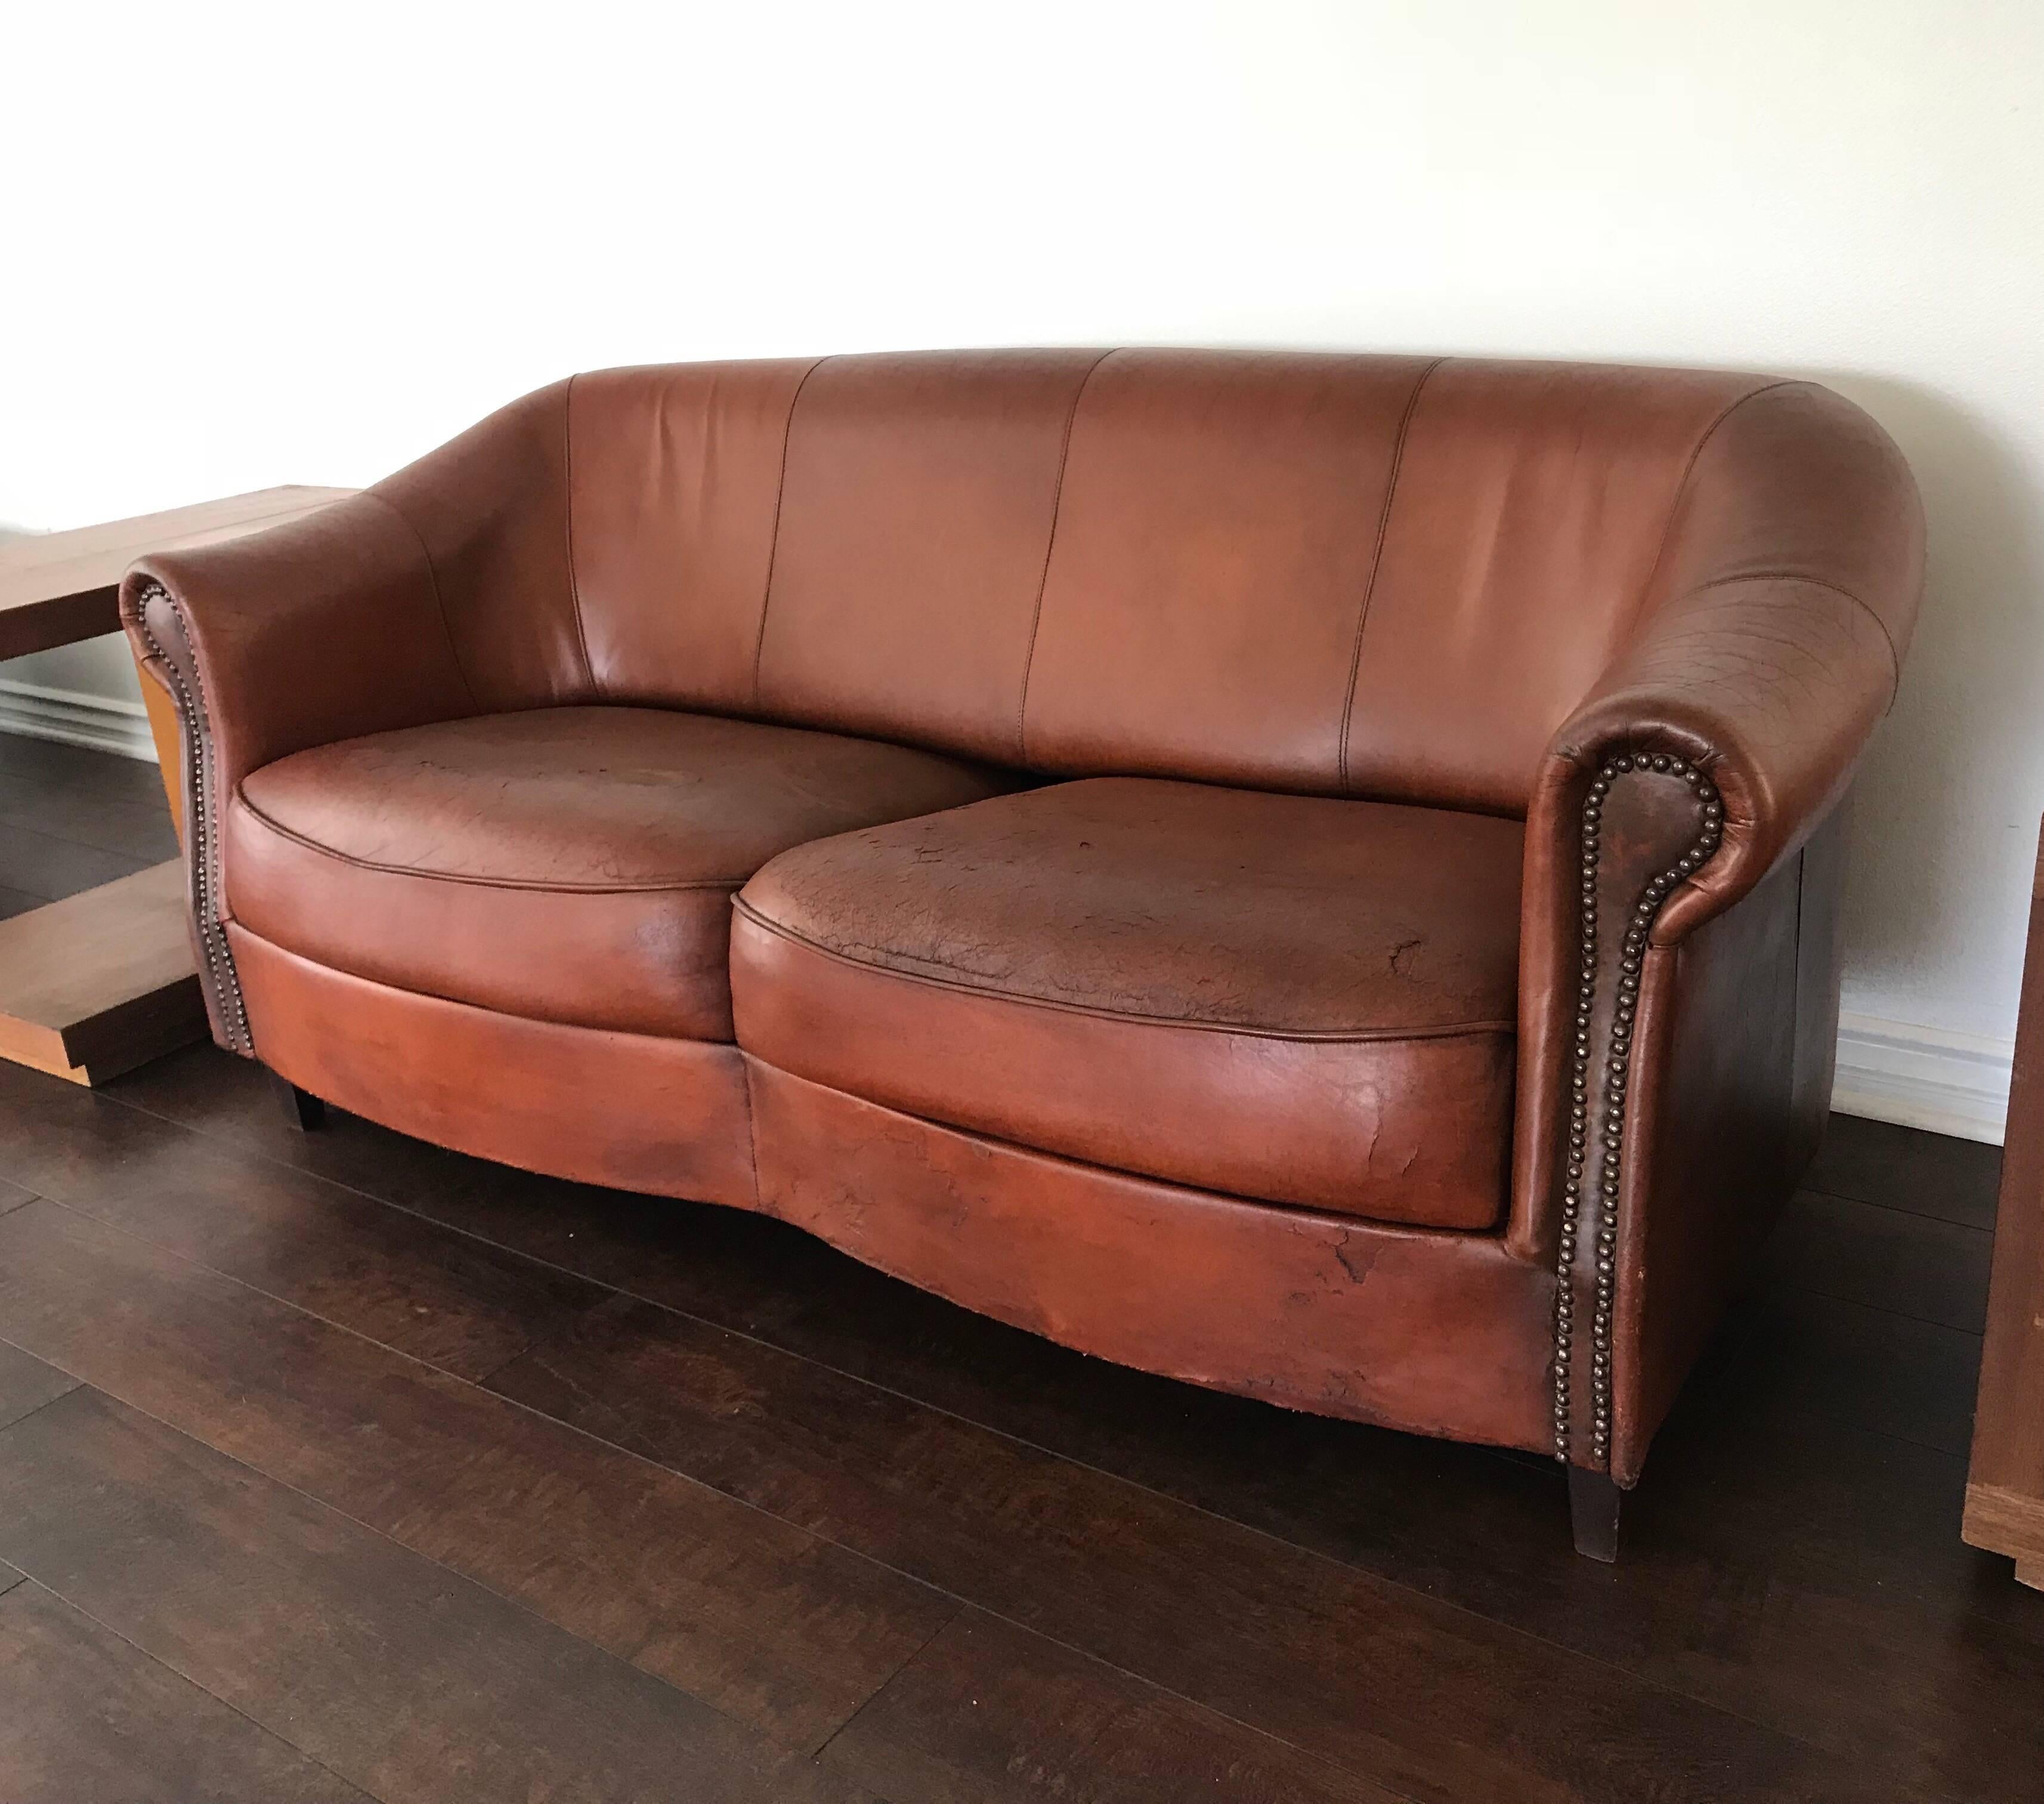 A wonderful distressed lamb skin leather sofa in a beautiful cognac color hand made by Dutch craftsman, Joris. Original tag.